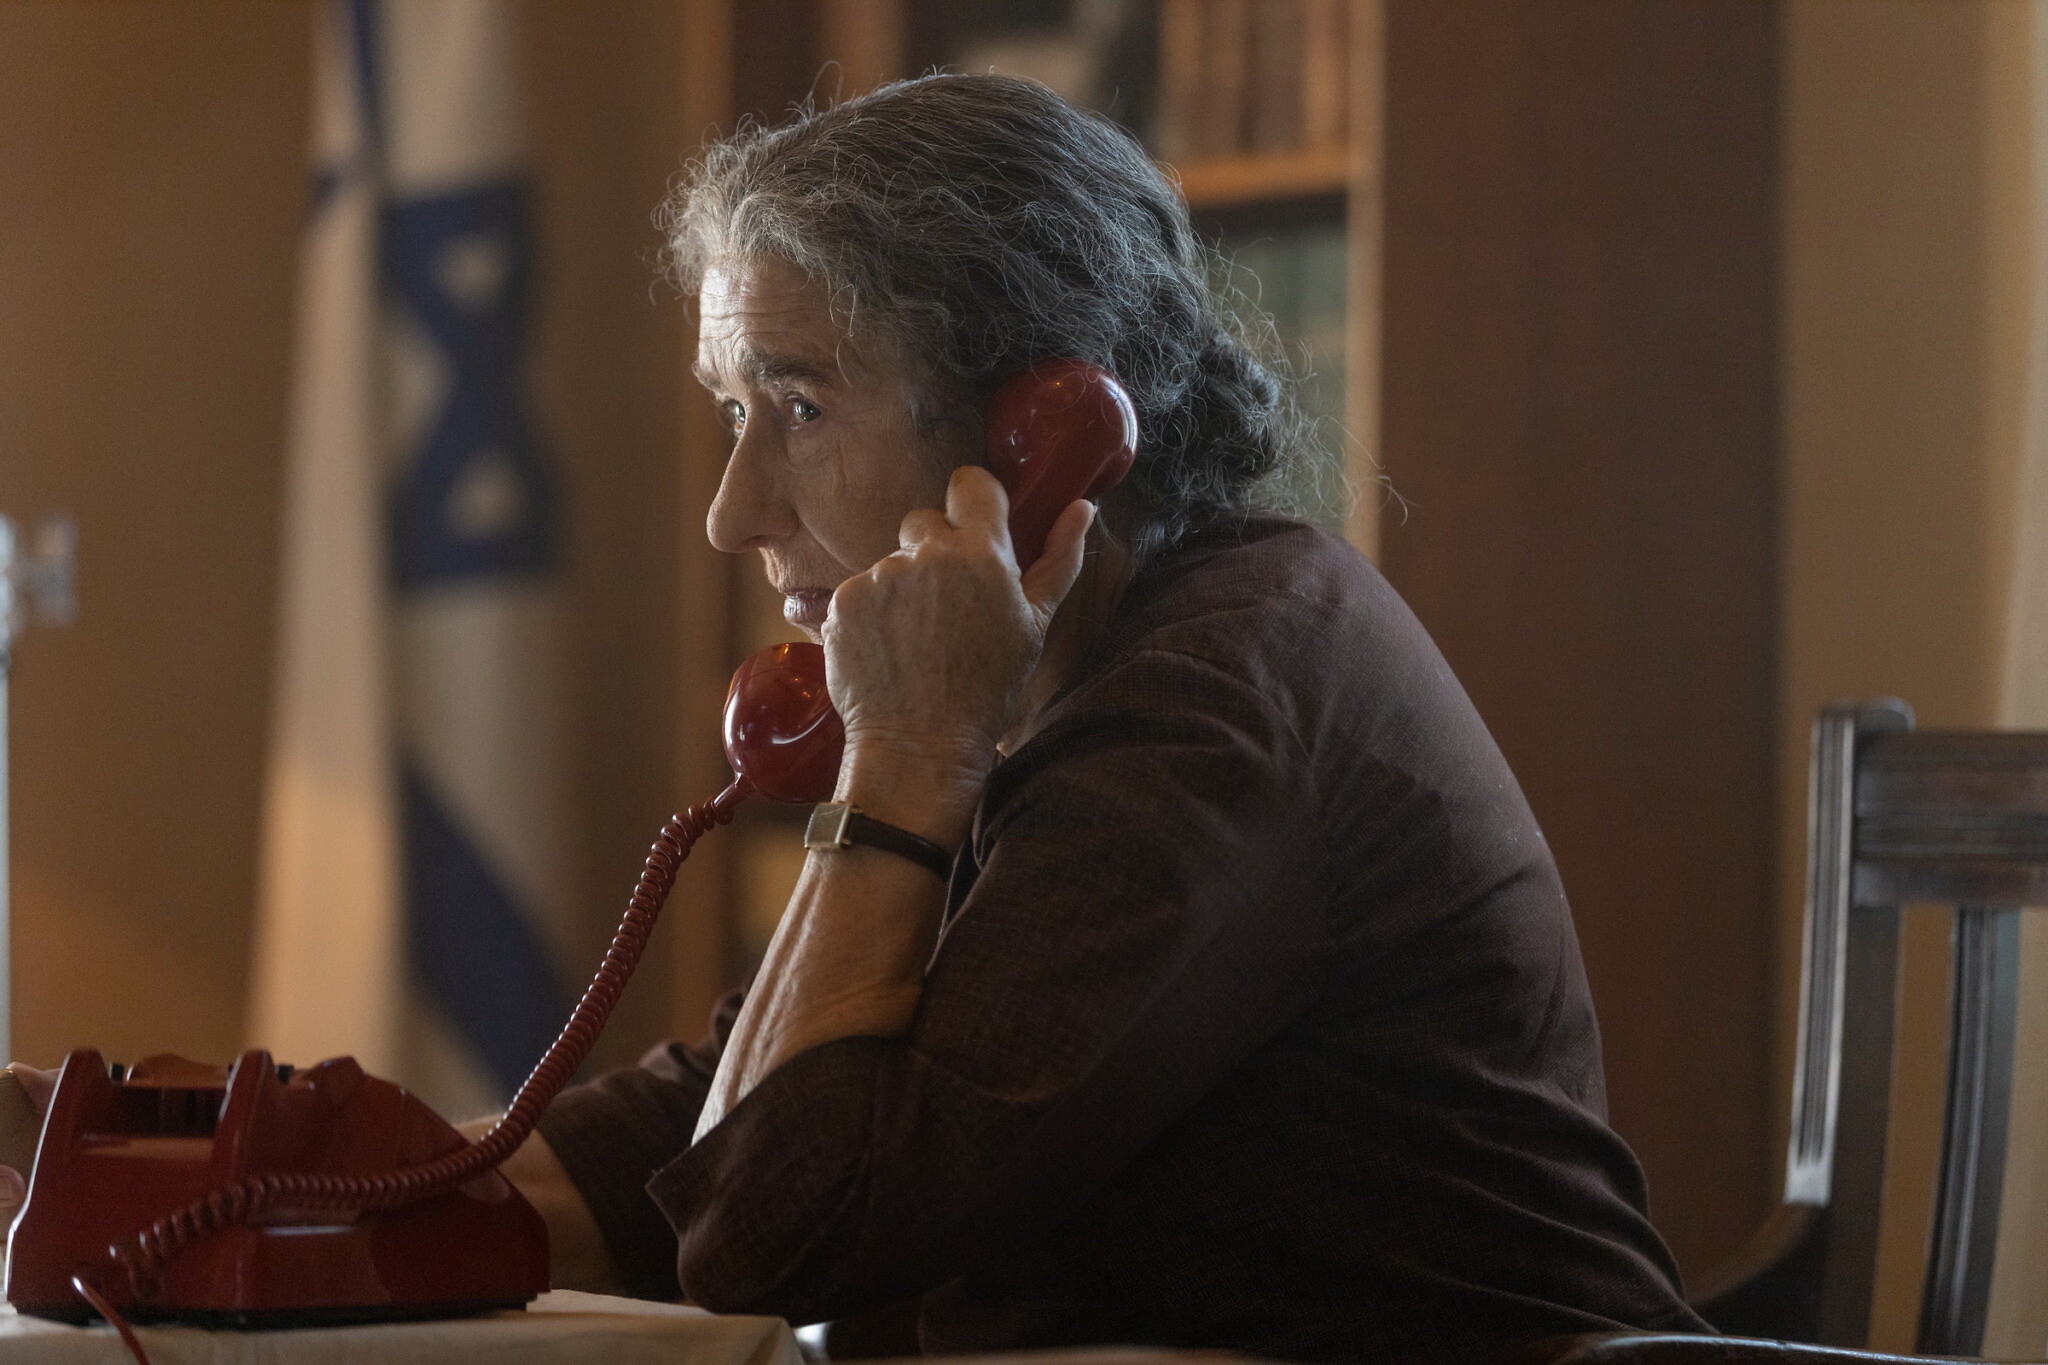 Jerusalem Film Fesl to open with biopic 'Golda' starring Helen